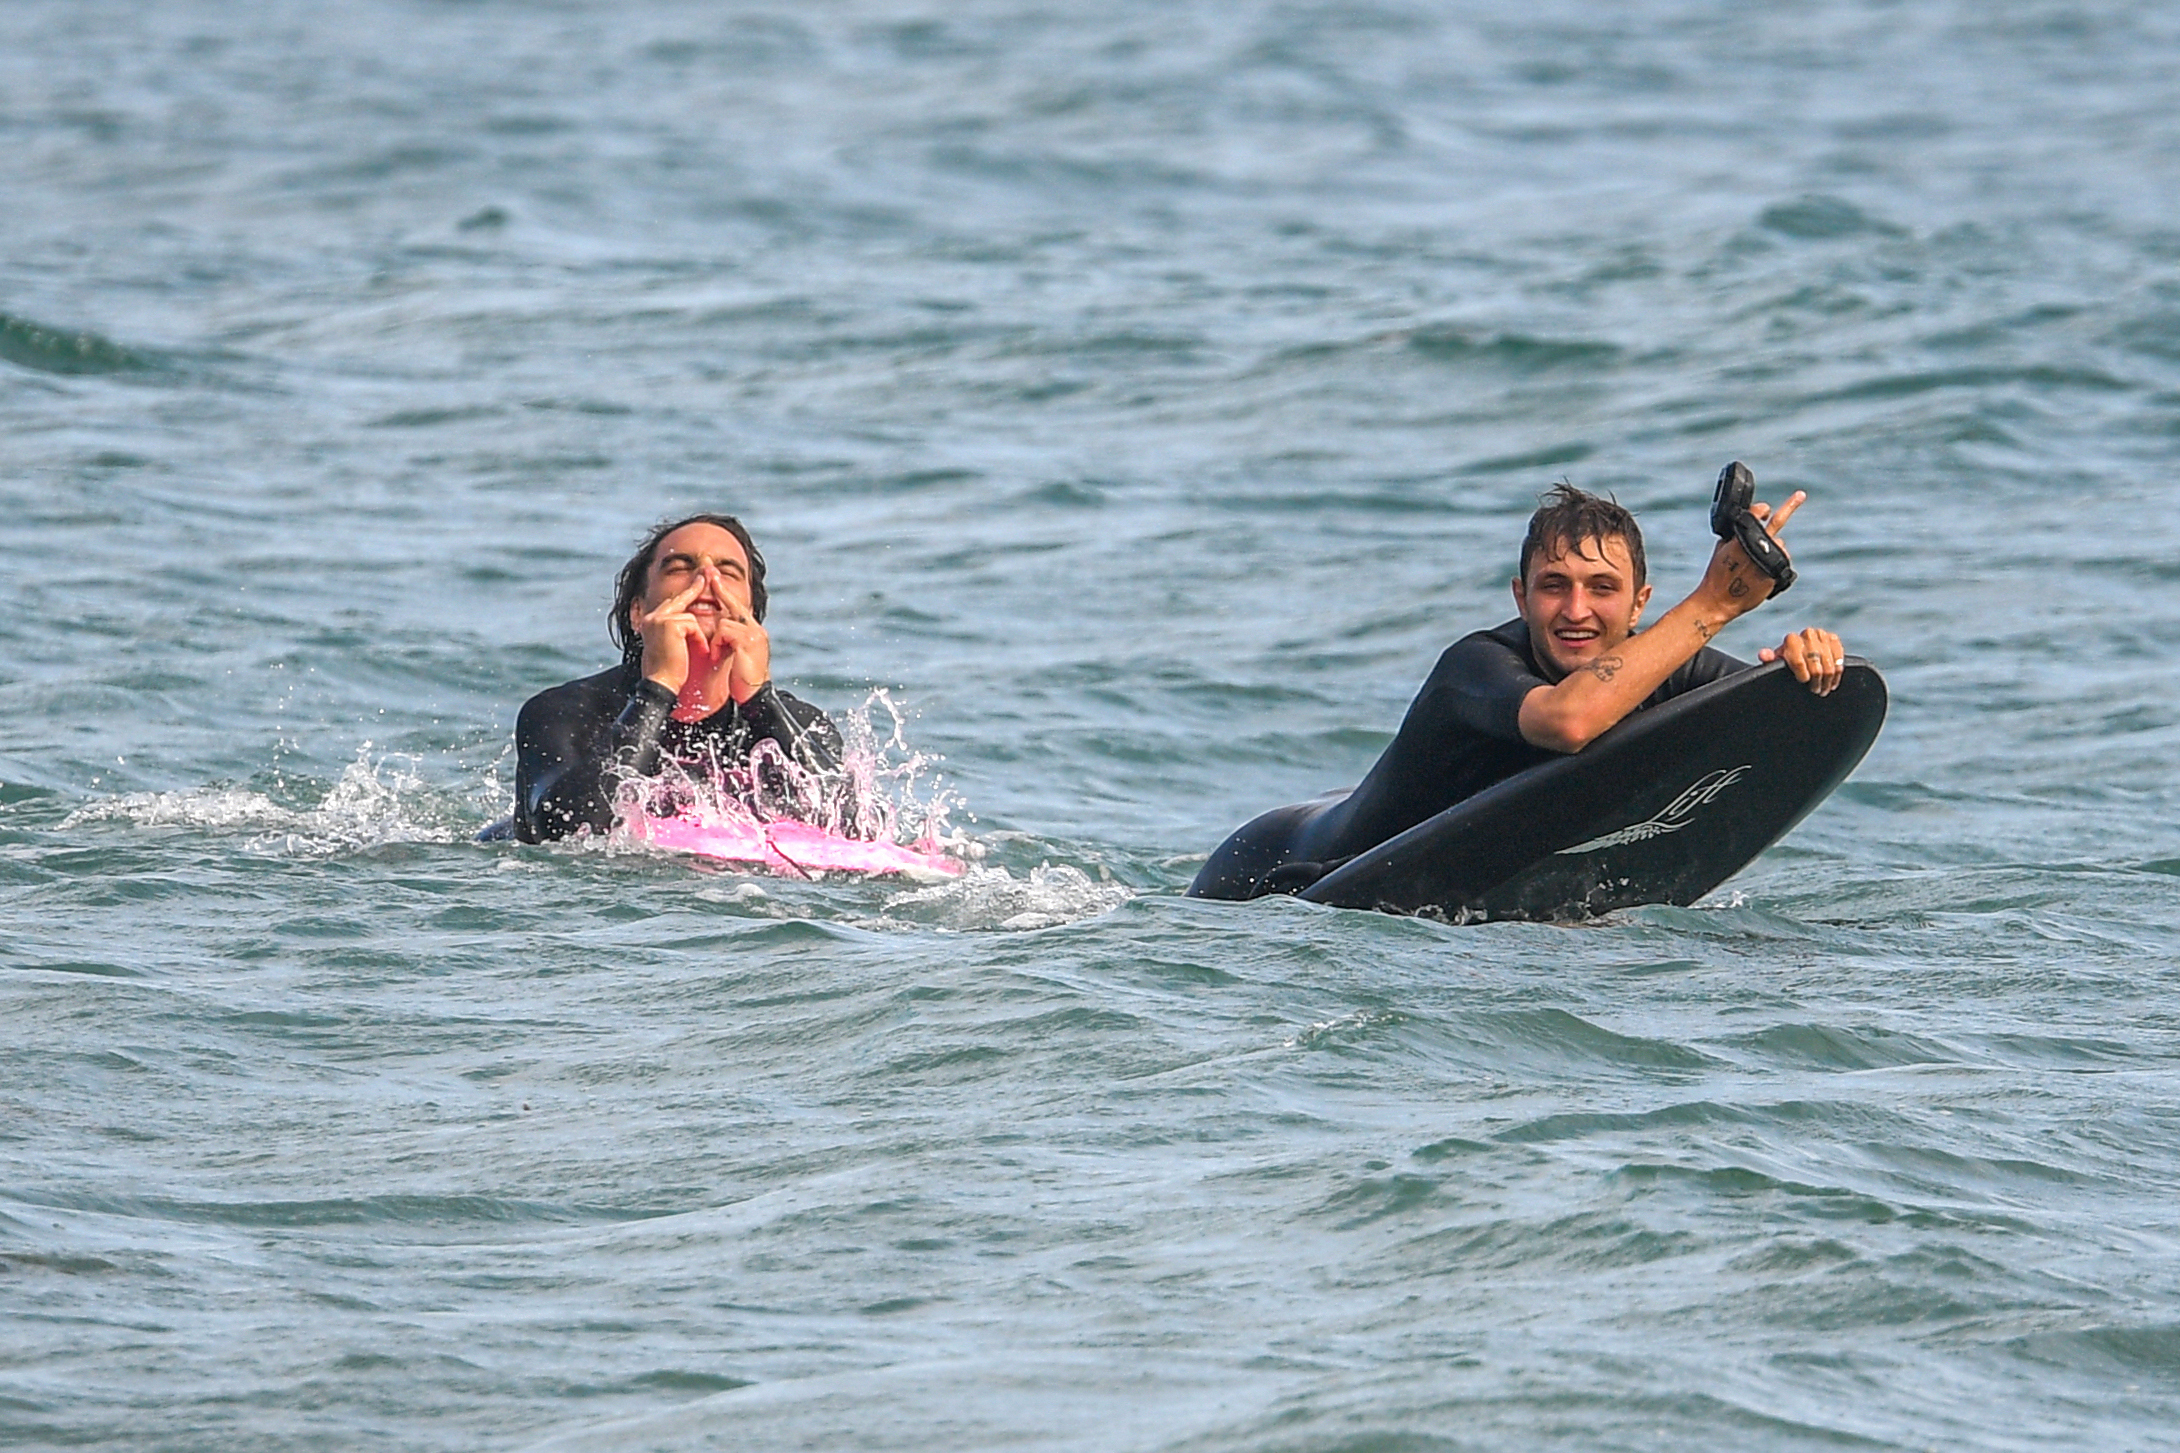 Dua and her boyfriend Anwar Hadid have a blast surfing in Malibu